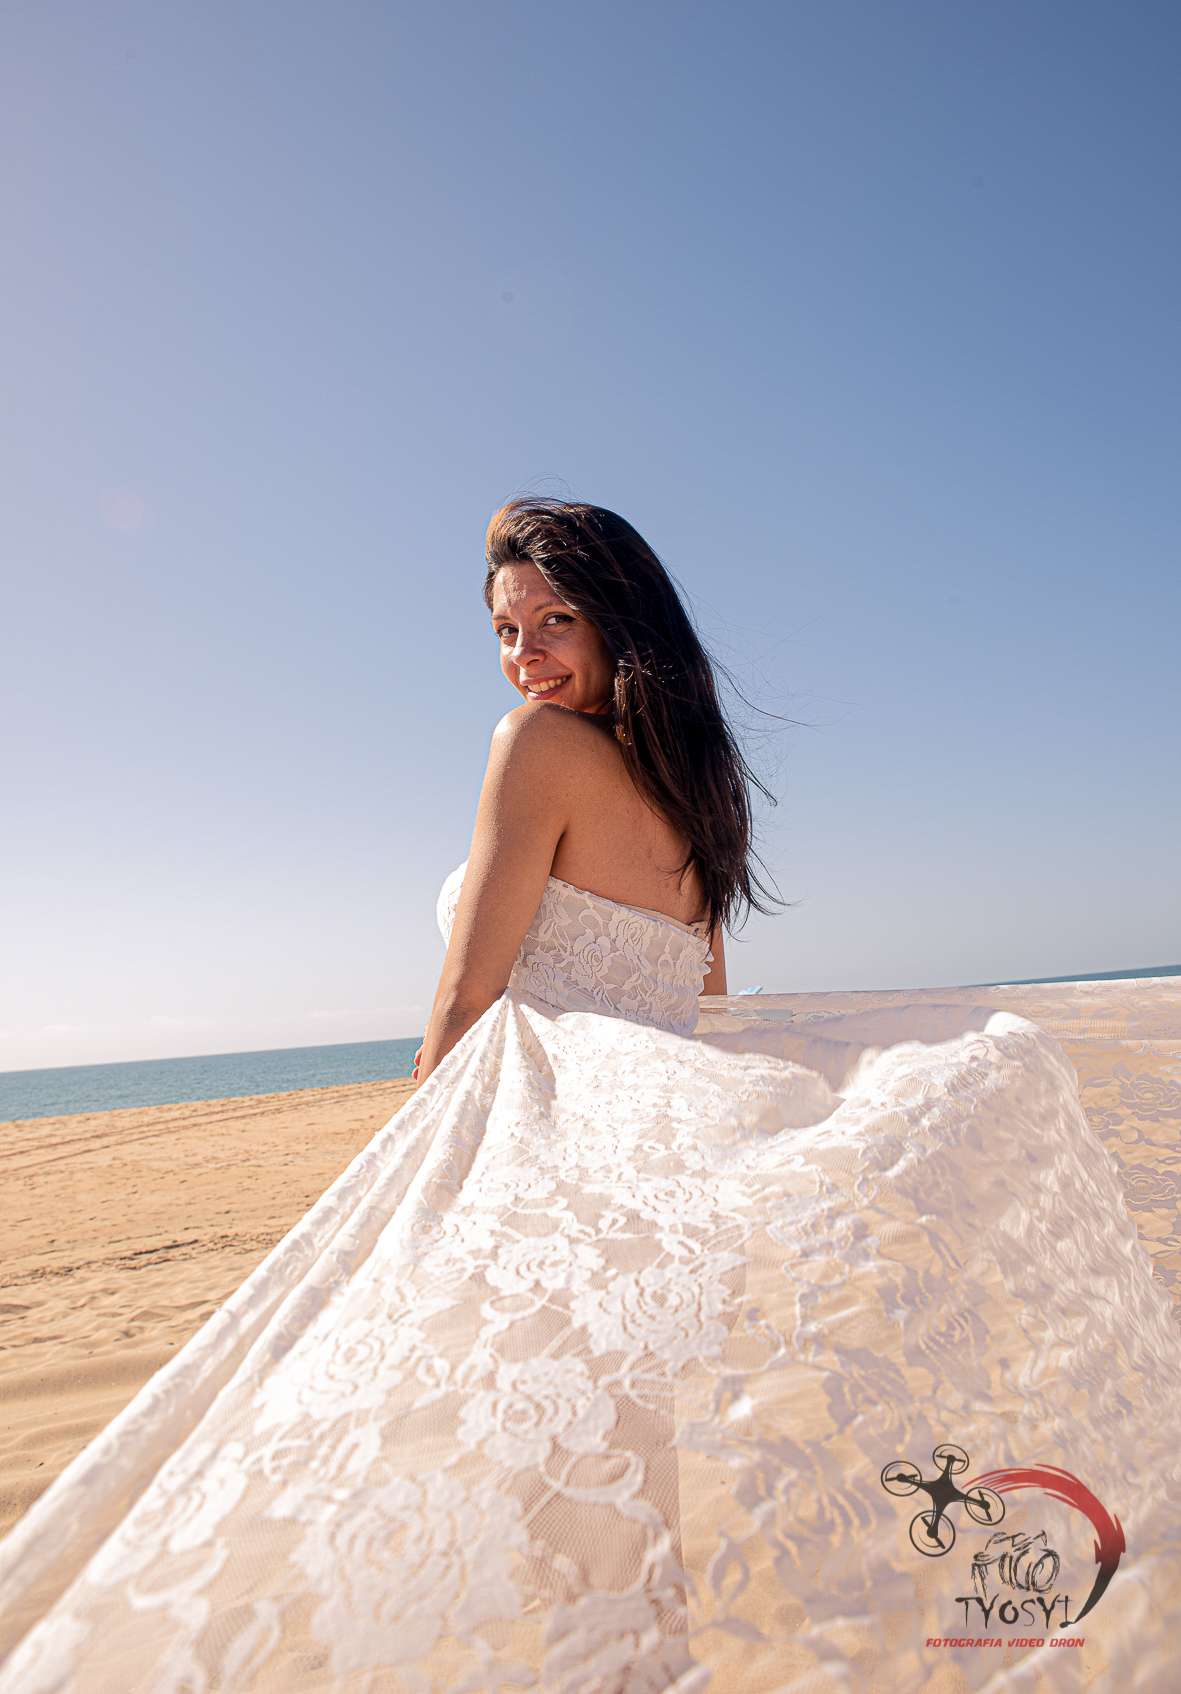 Fotografía TYOSYI - Huelva - Fotografia de bodas